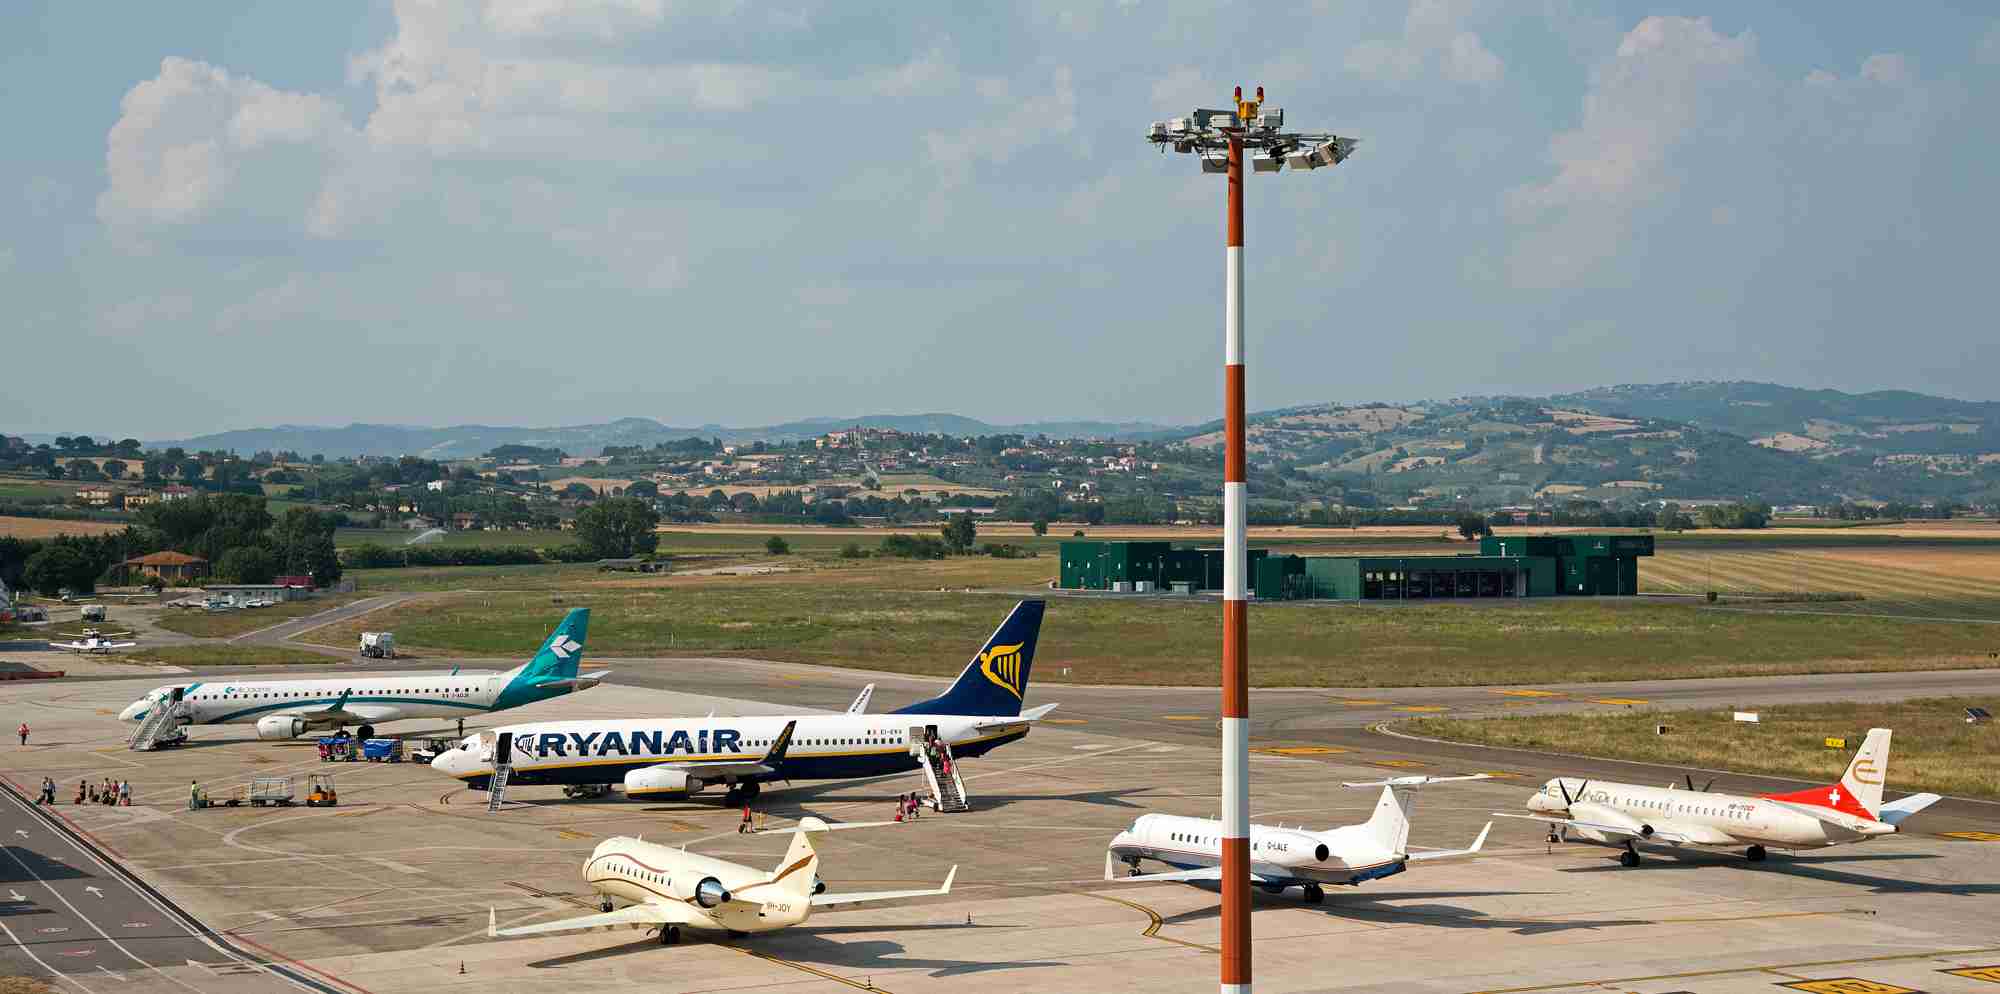 Aeroporto Umbria Perugia piazzale aeromobili luglio 2015